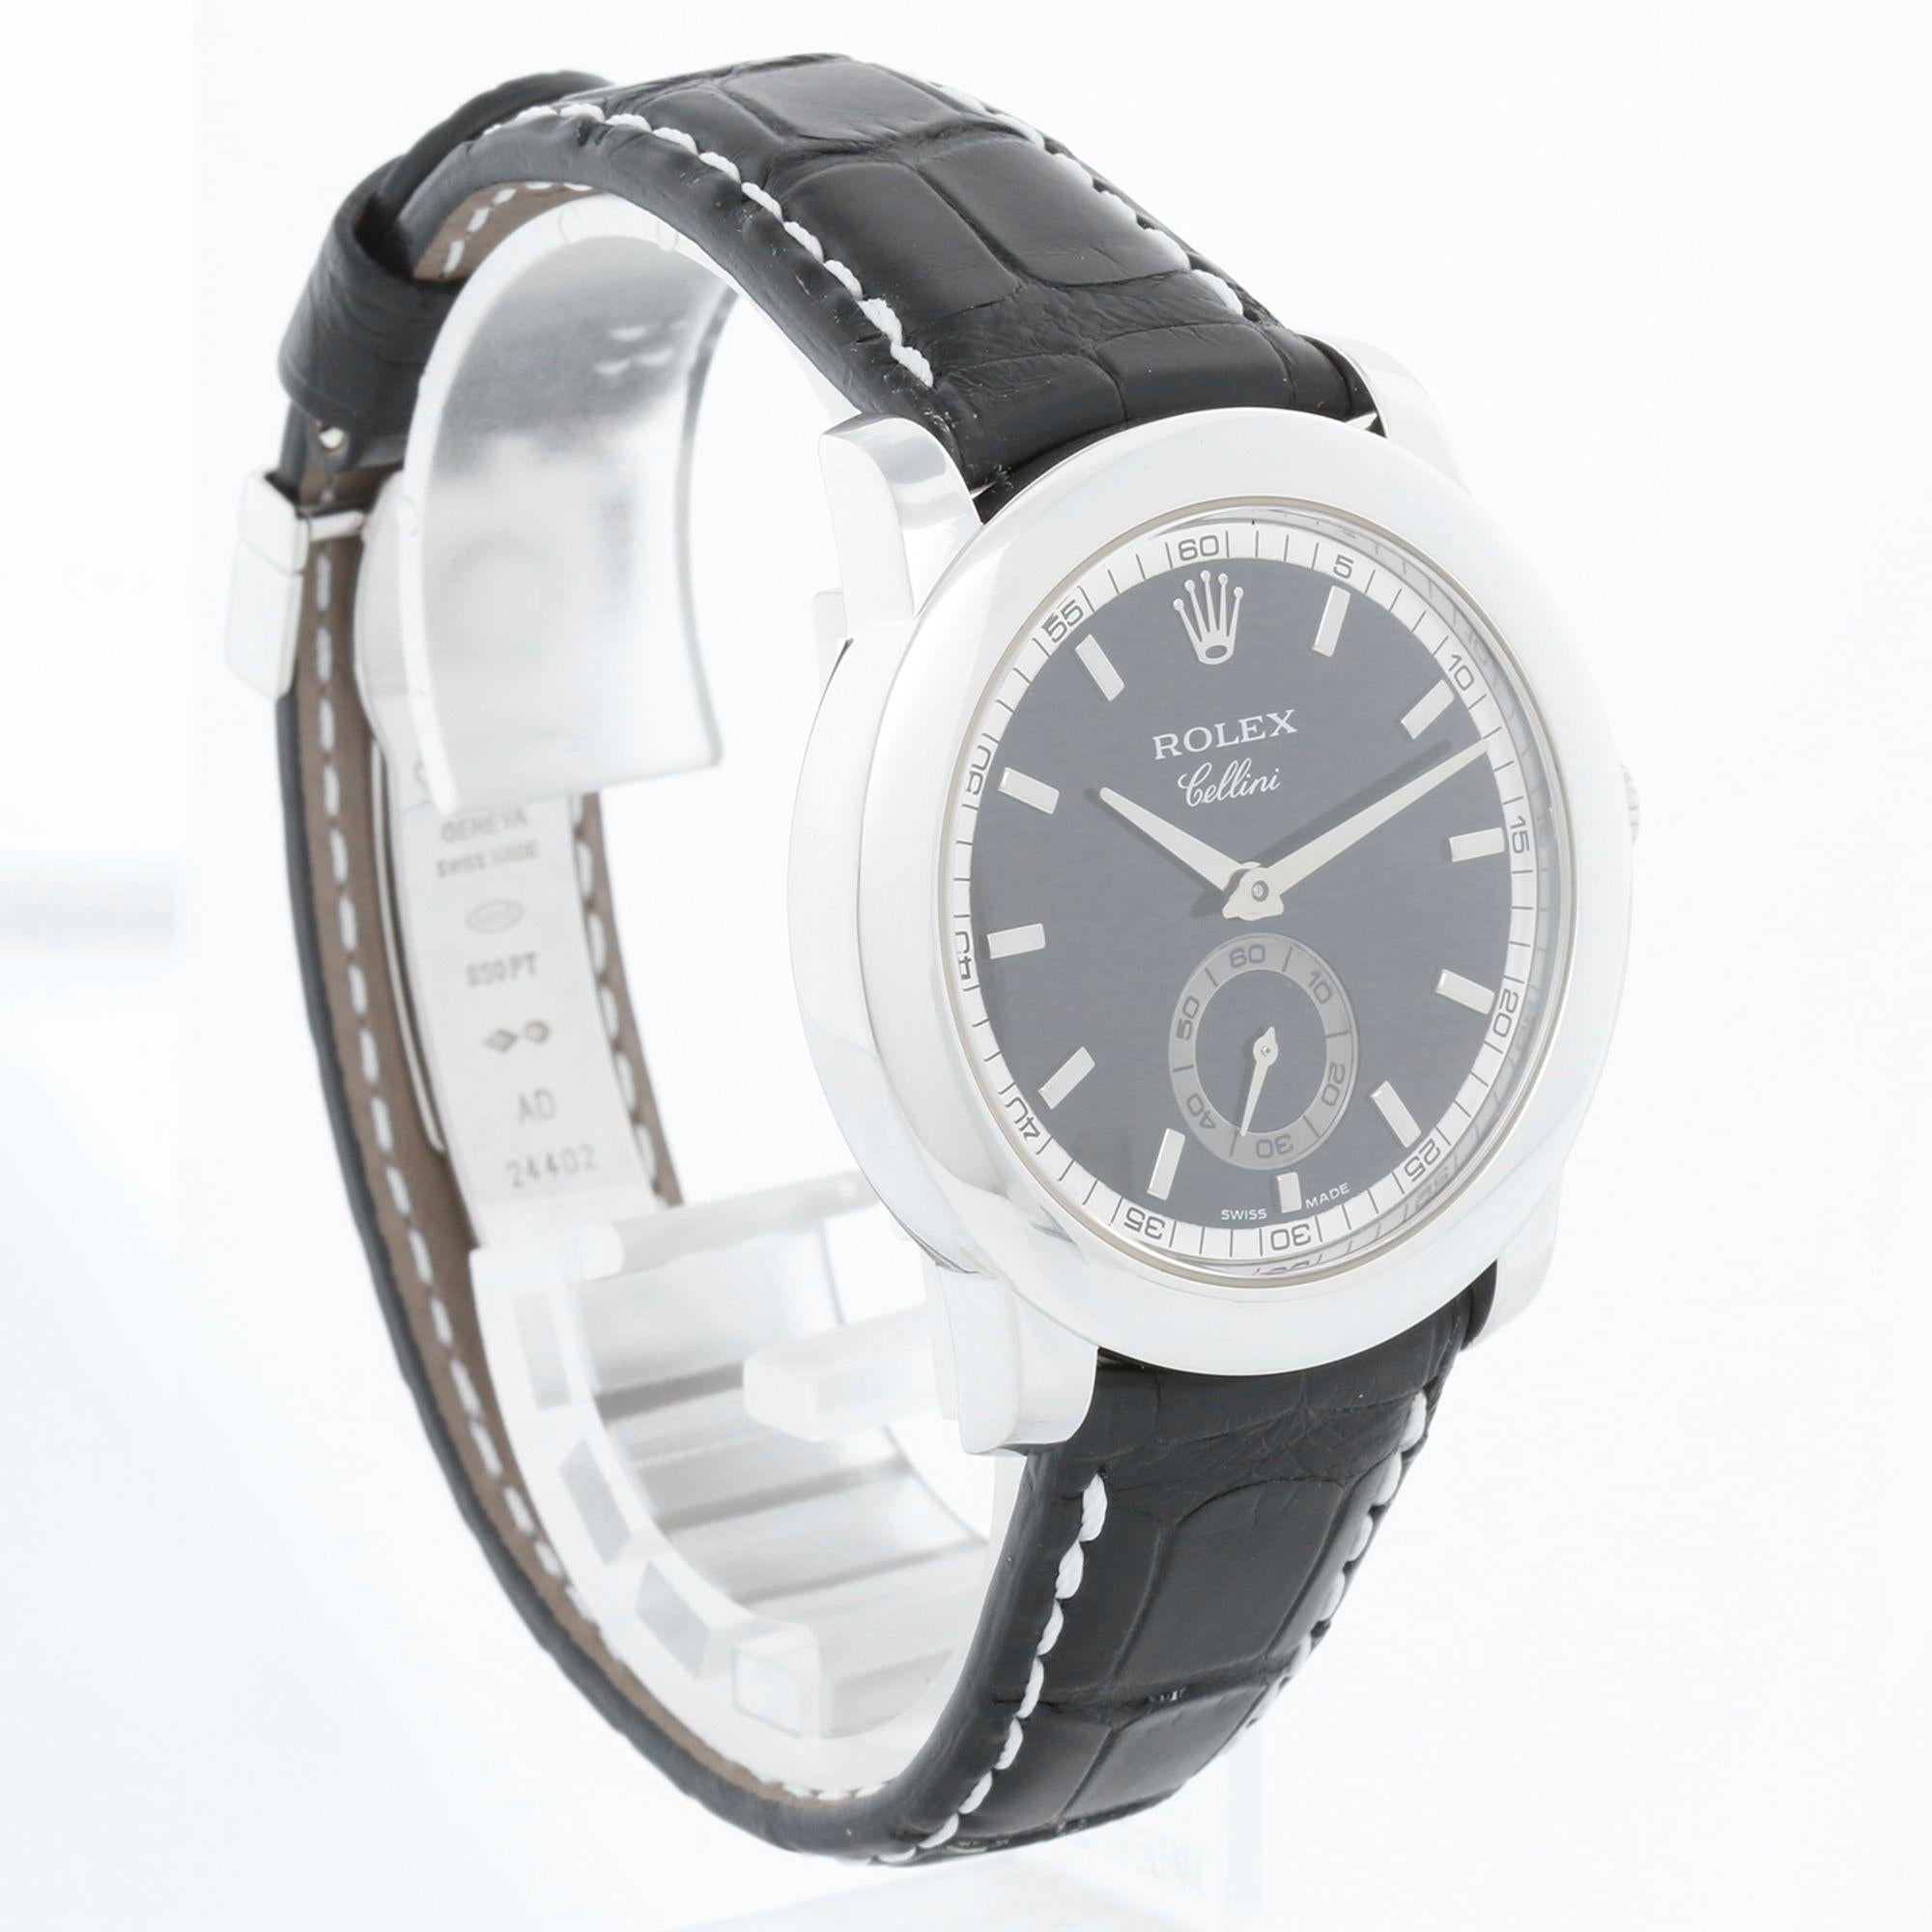 Rolex Cellini Cellinium Men's Platinum Watch with Dial 5241/6 For Sale 2